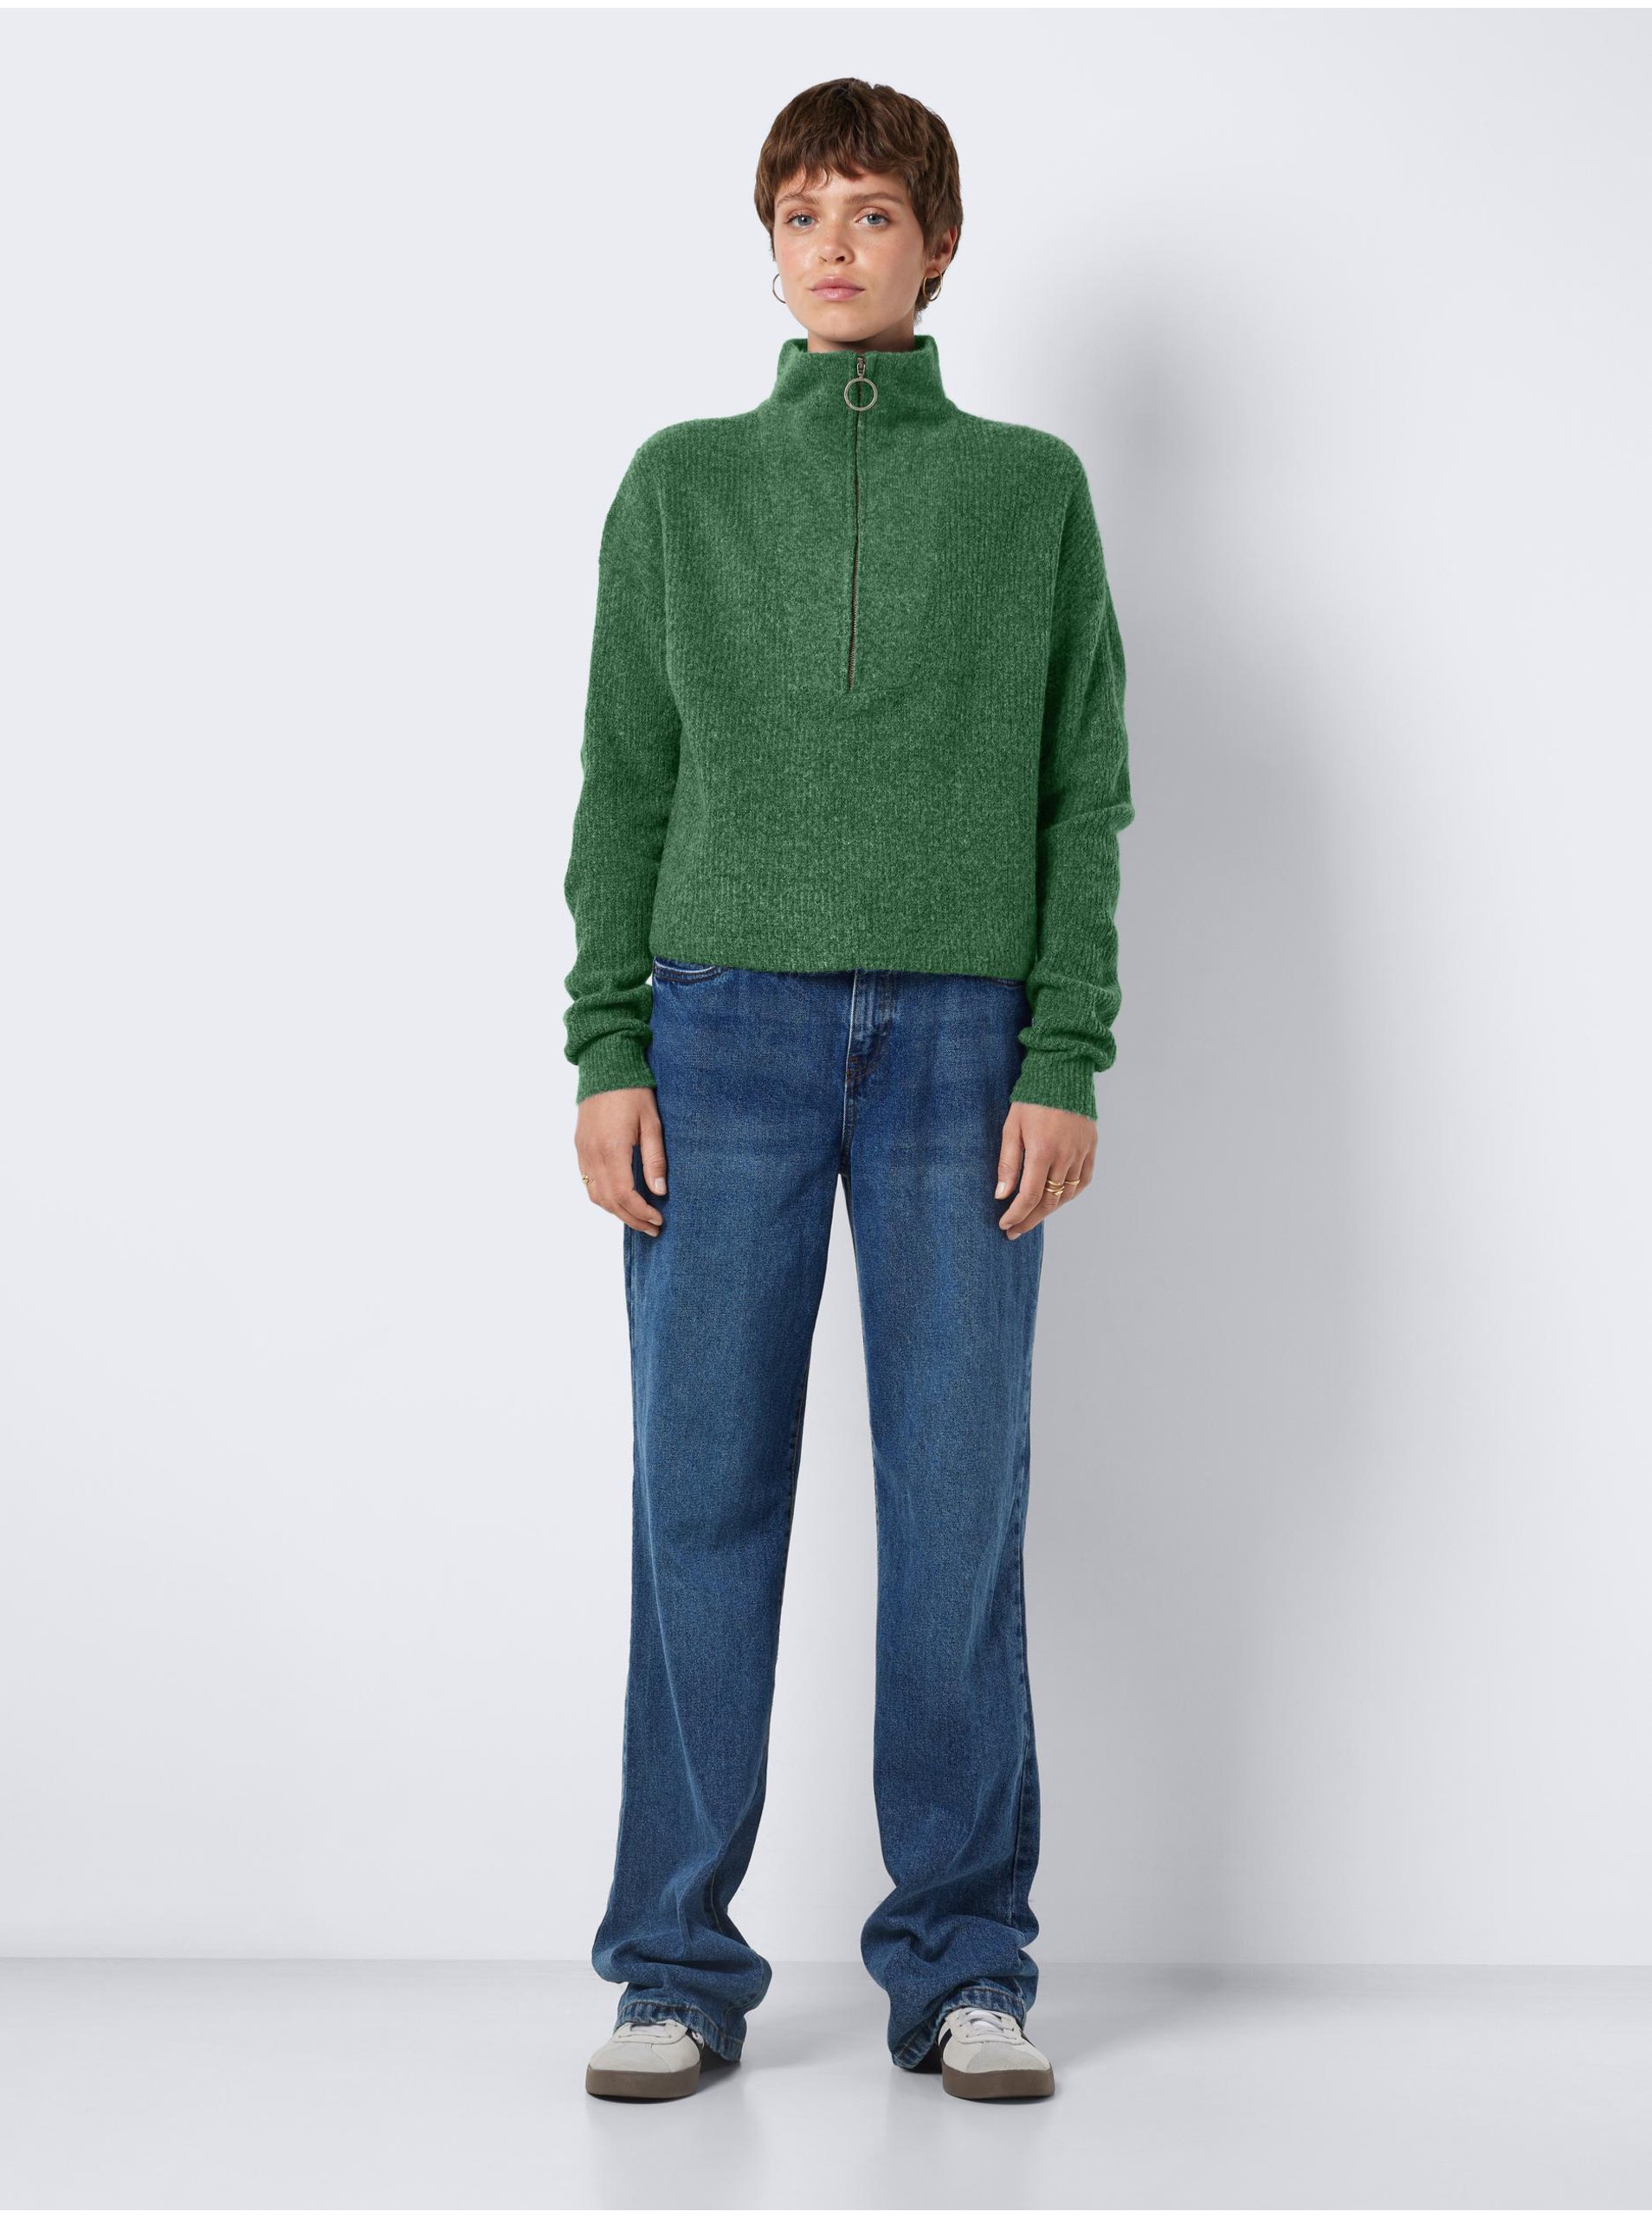 Green Womens Sweater Noisy May New Alice - Women